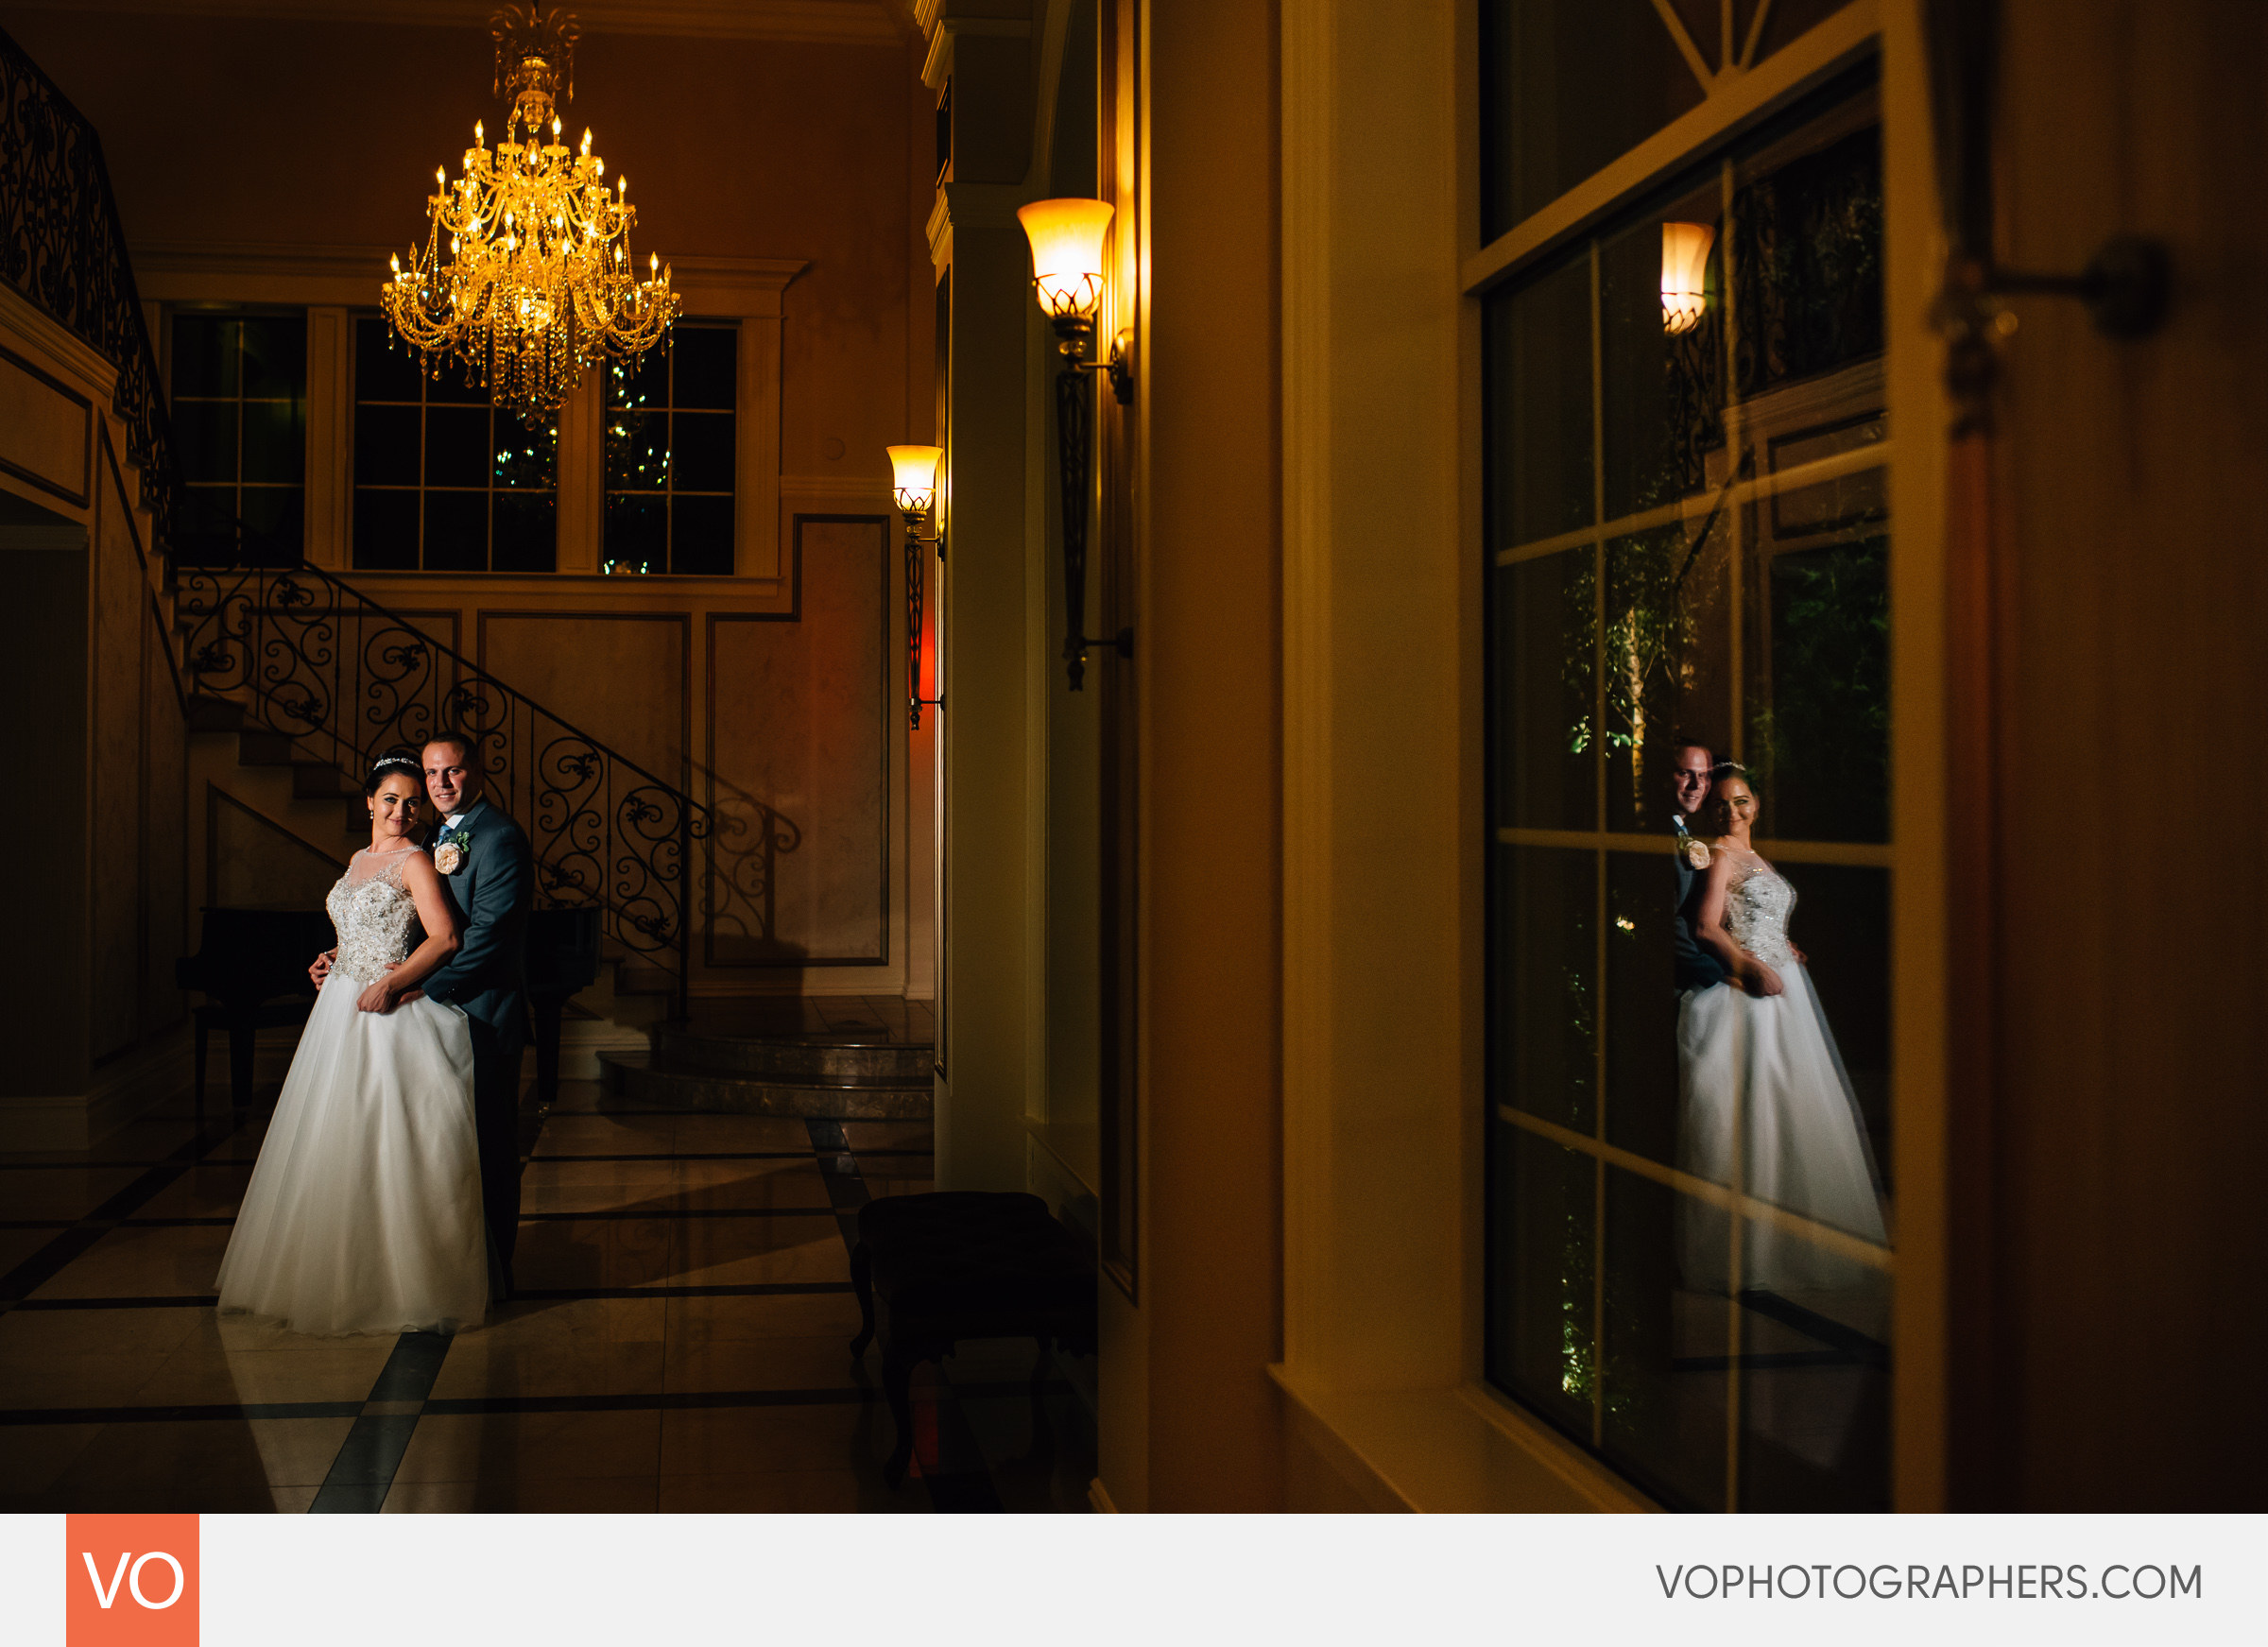 Bride and groom reflection in window, chandelier.